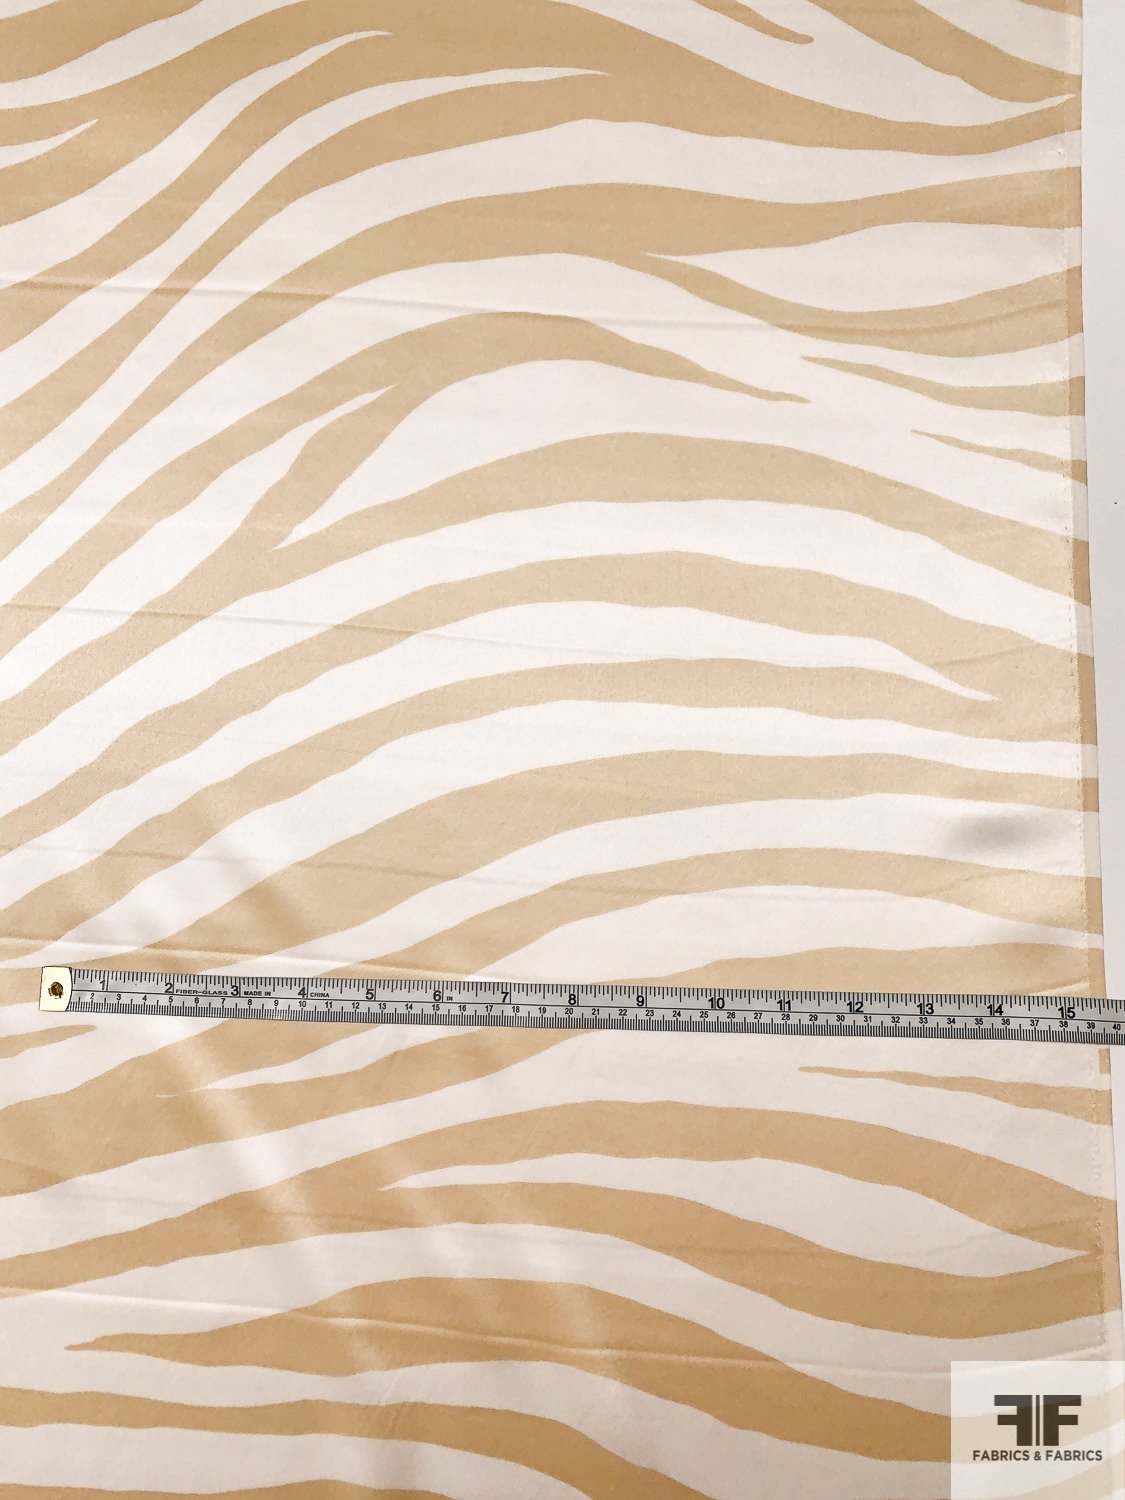 Zebra Inspired Printed Silk Charmeuse - Antique Gold / Off White